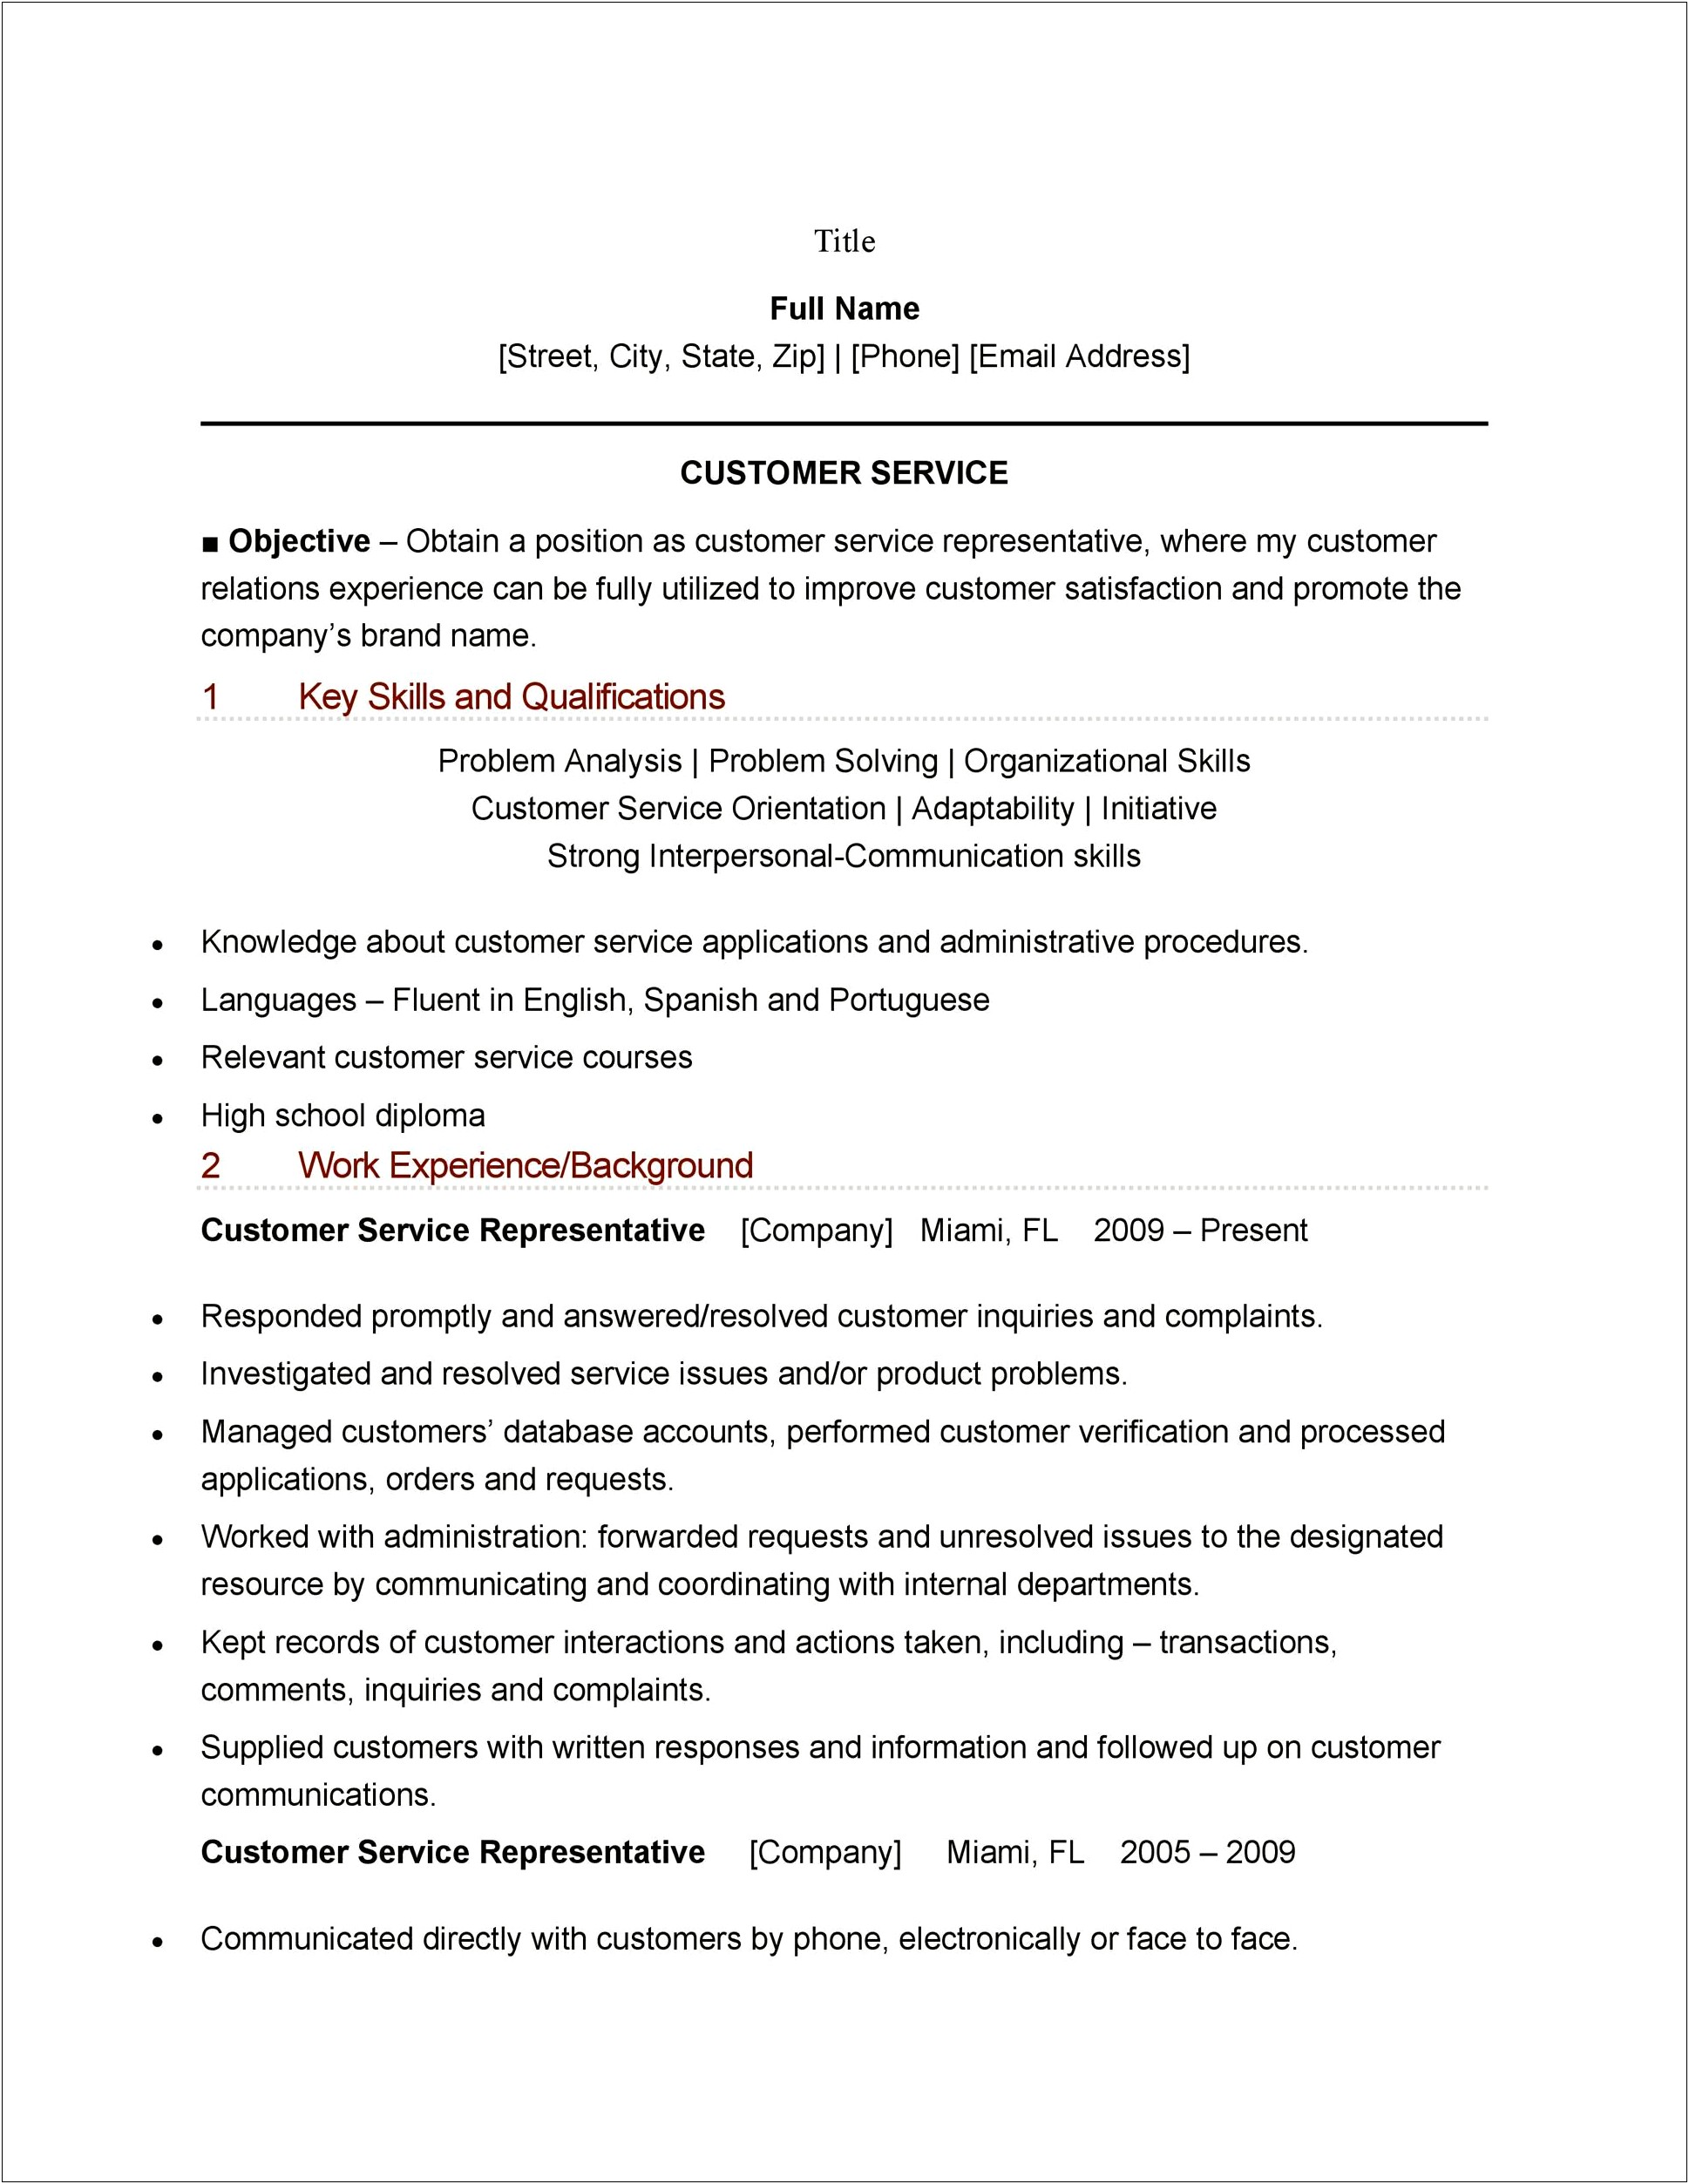 Member Service Representative Job Description Resume